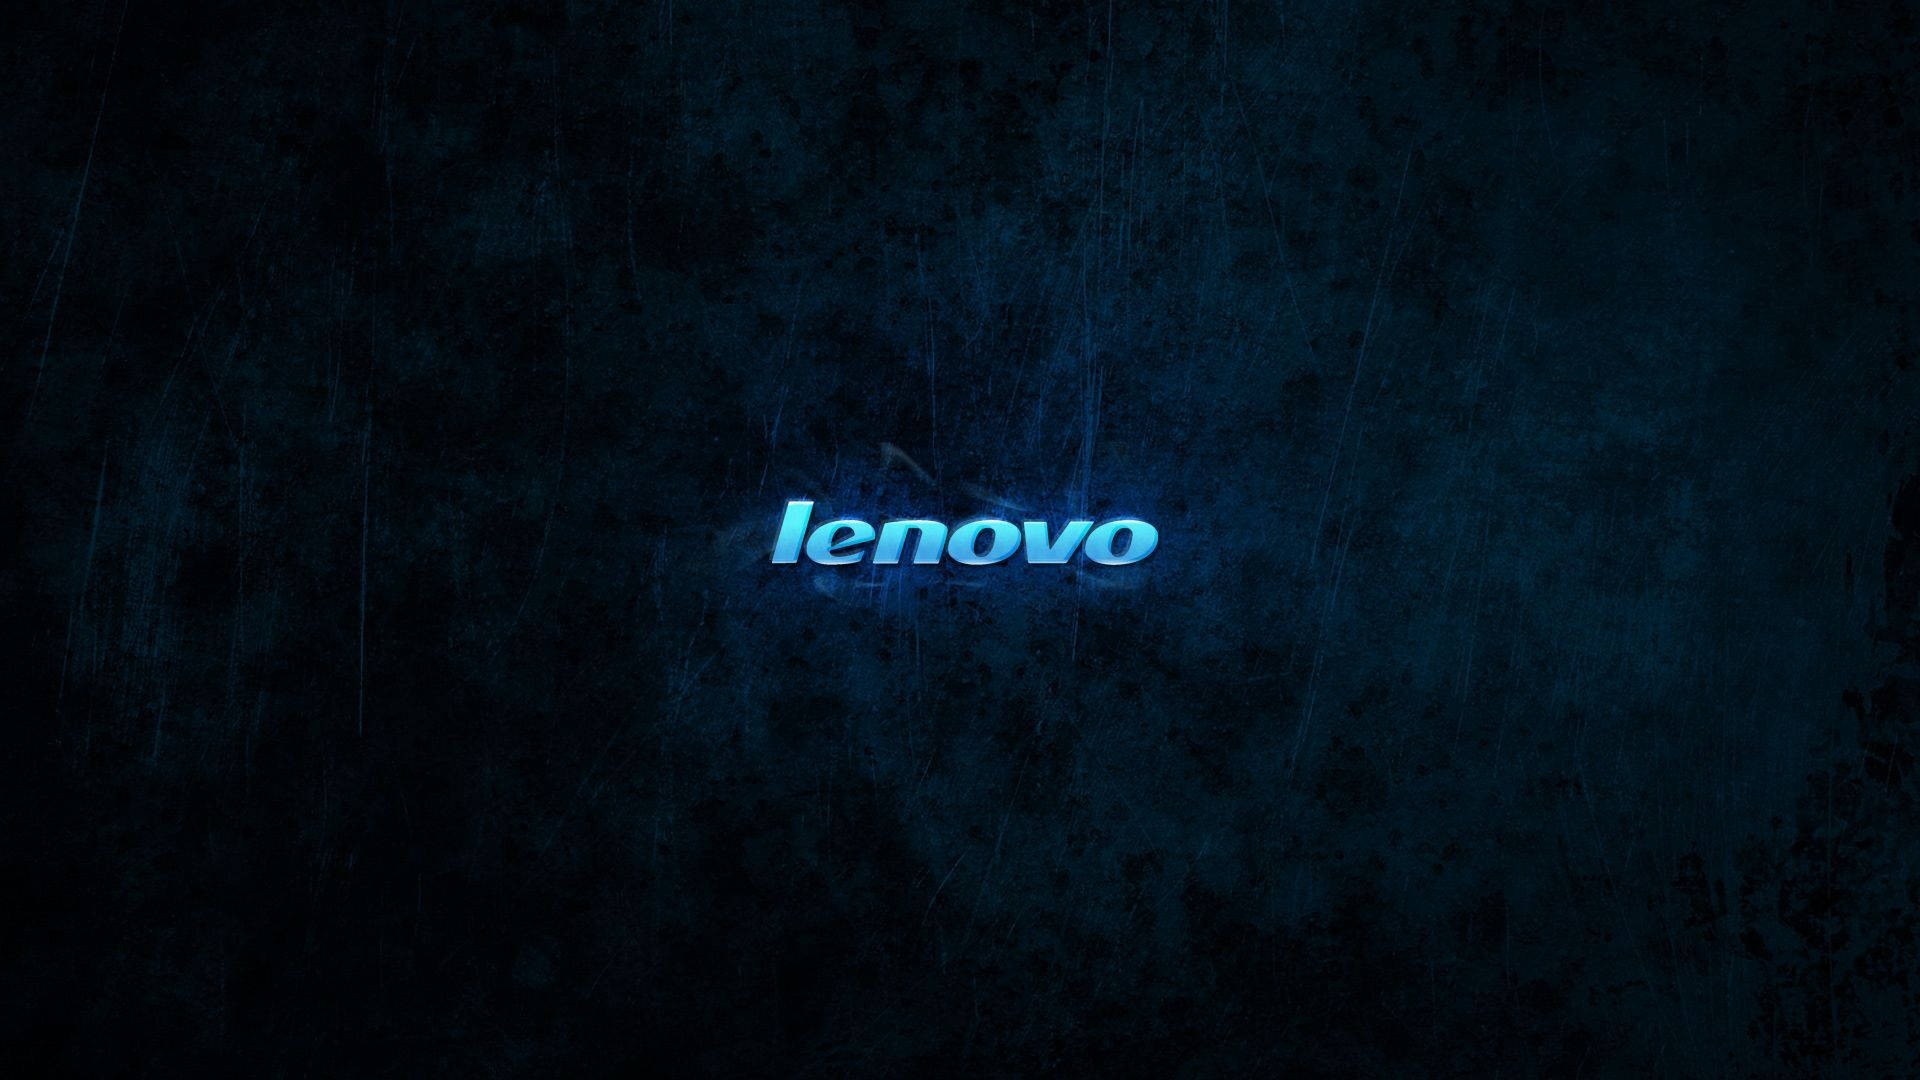 Lenovo Tablet Background